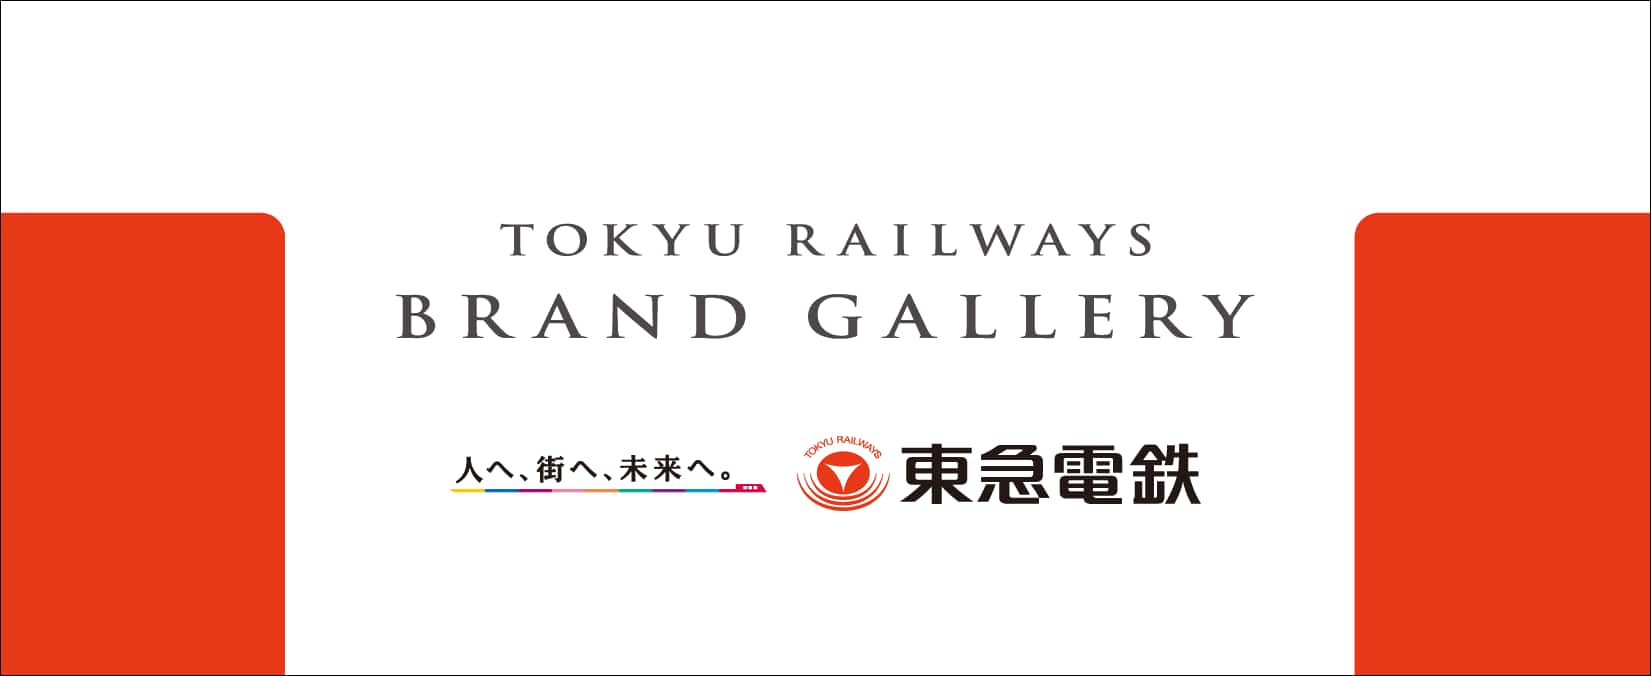 TOKYU RAILWAYS BRAND GALLERY